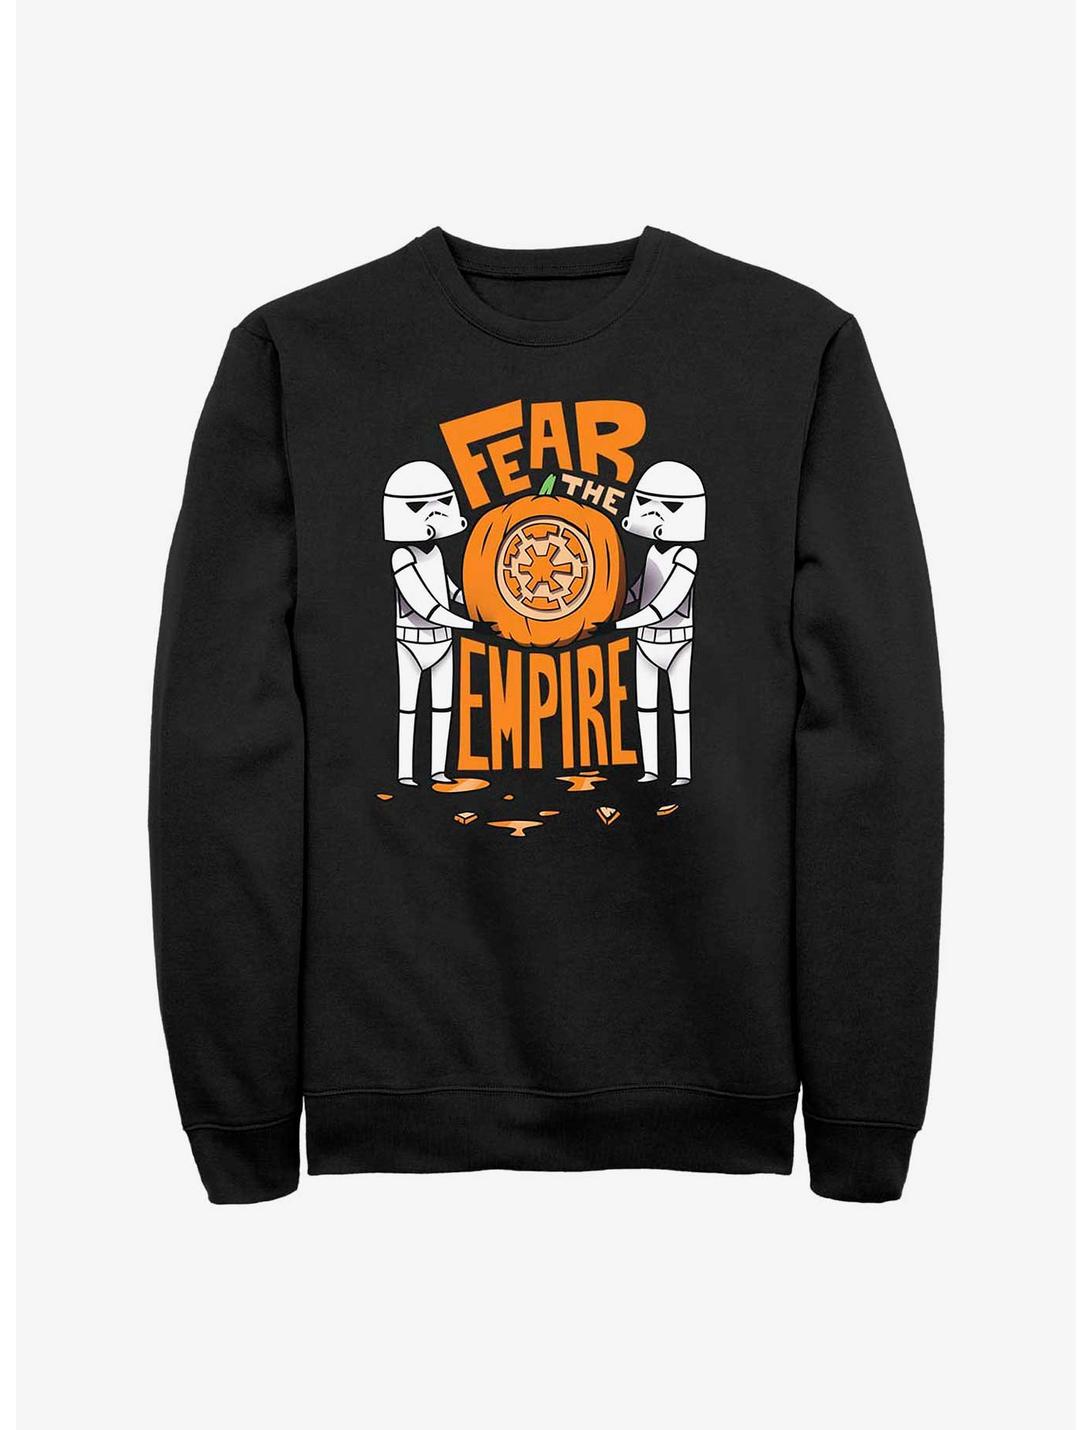 Star Wars Fear The Empire Sweatshirt, BLACK, hi-res